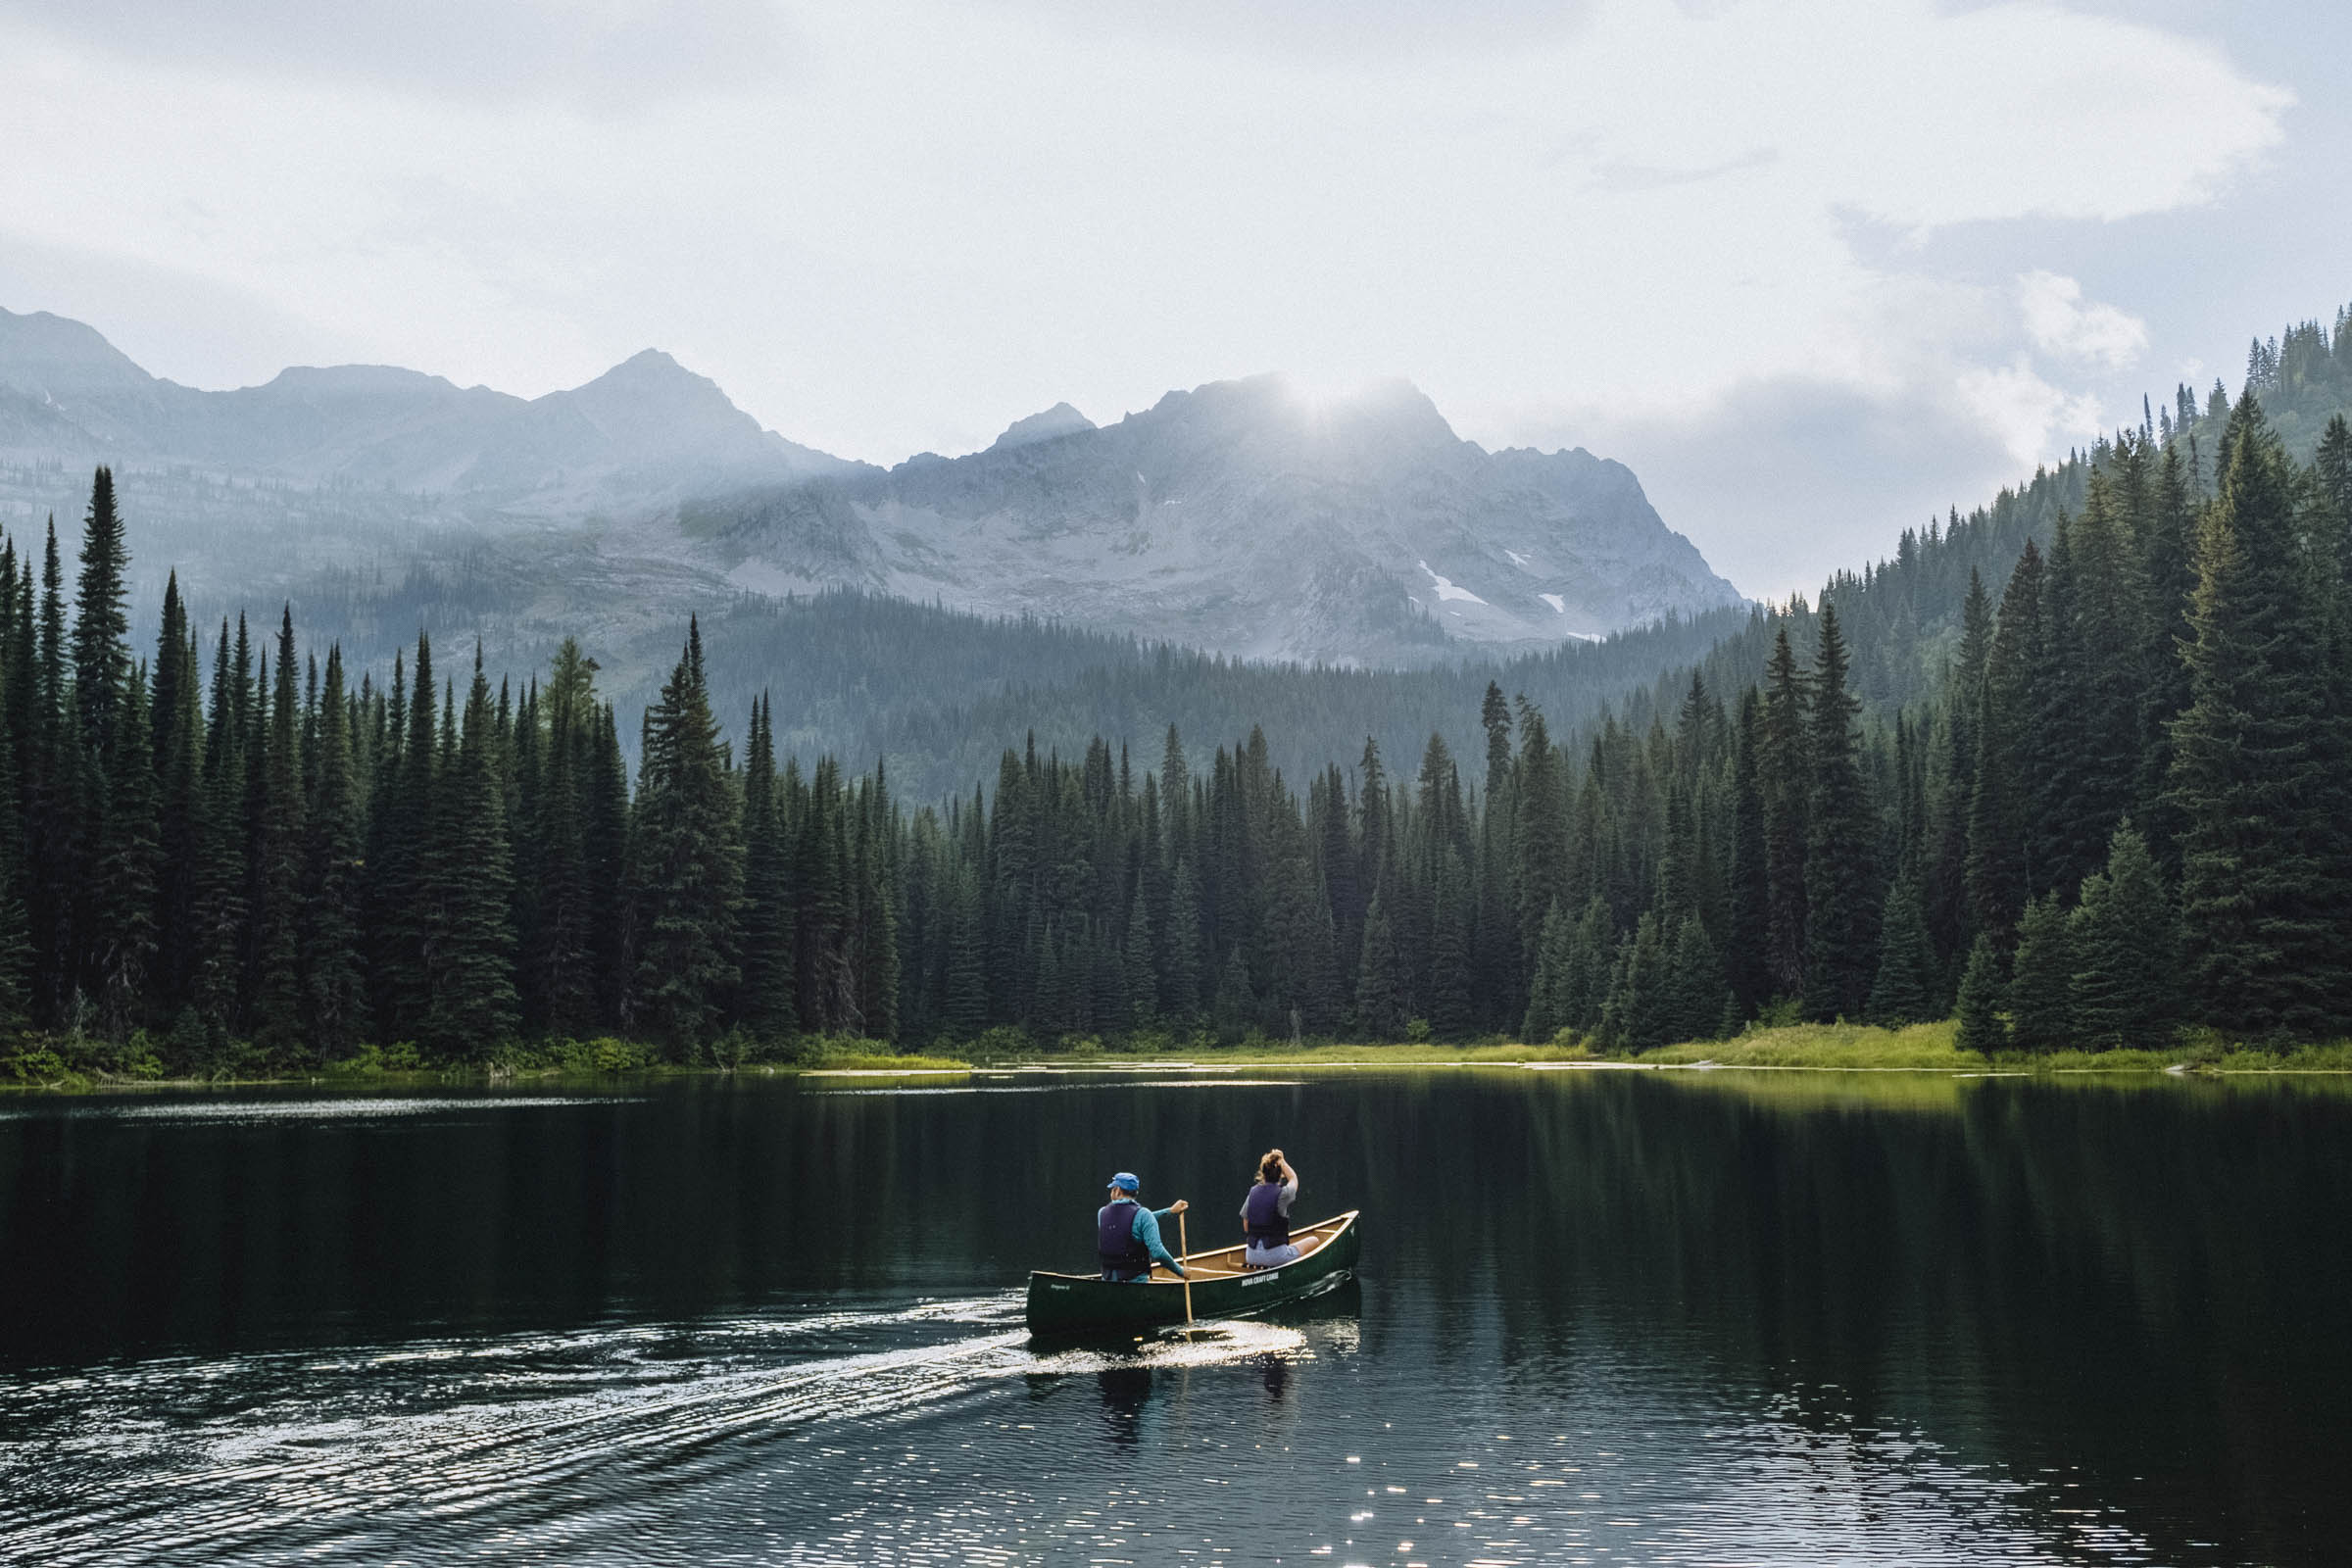 Canoeing on a mountain lake, Fernie BC